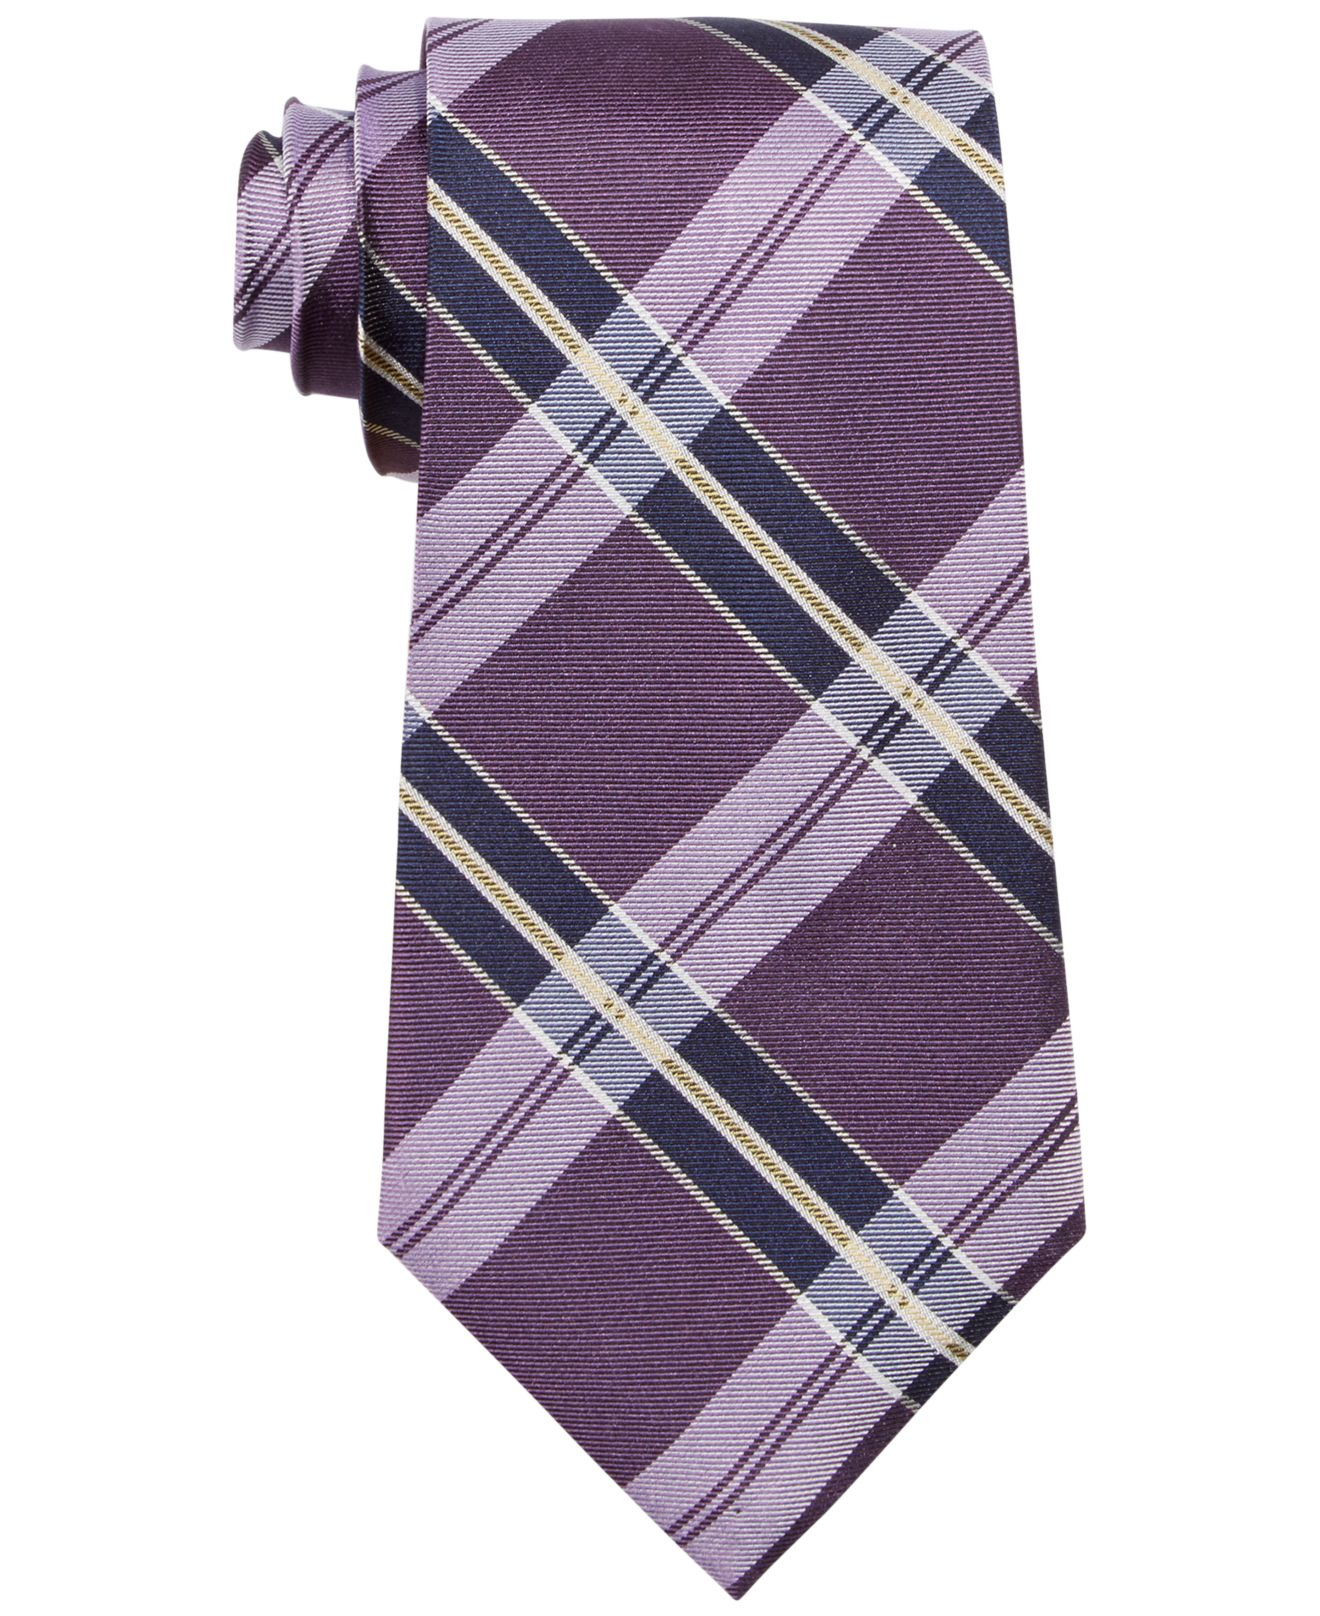 Lyst - Lauren By Ralph Lauren Silk Twill Plaid Tie in Purple for Men